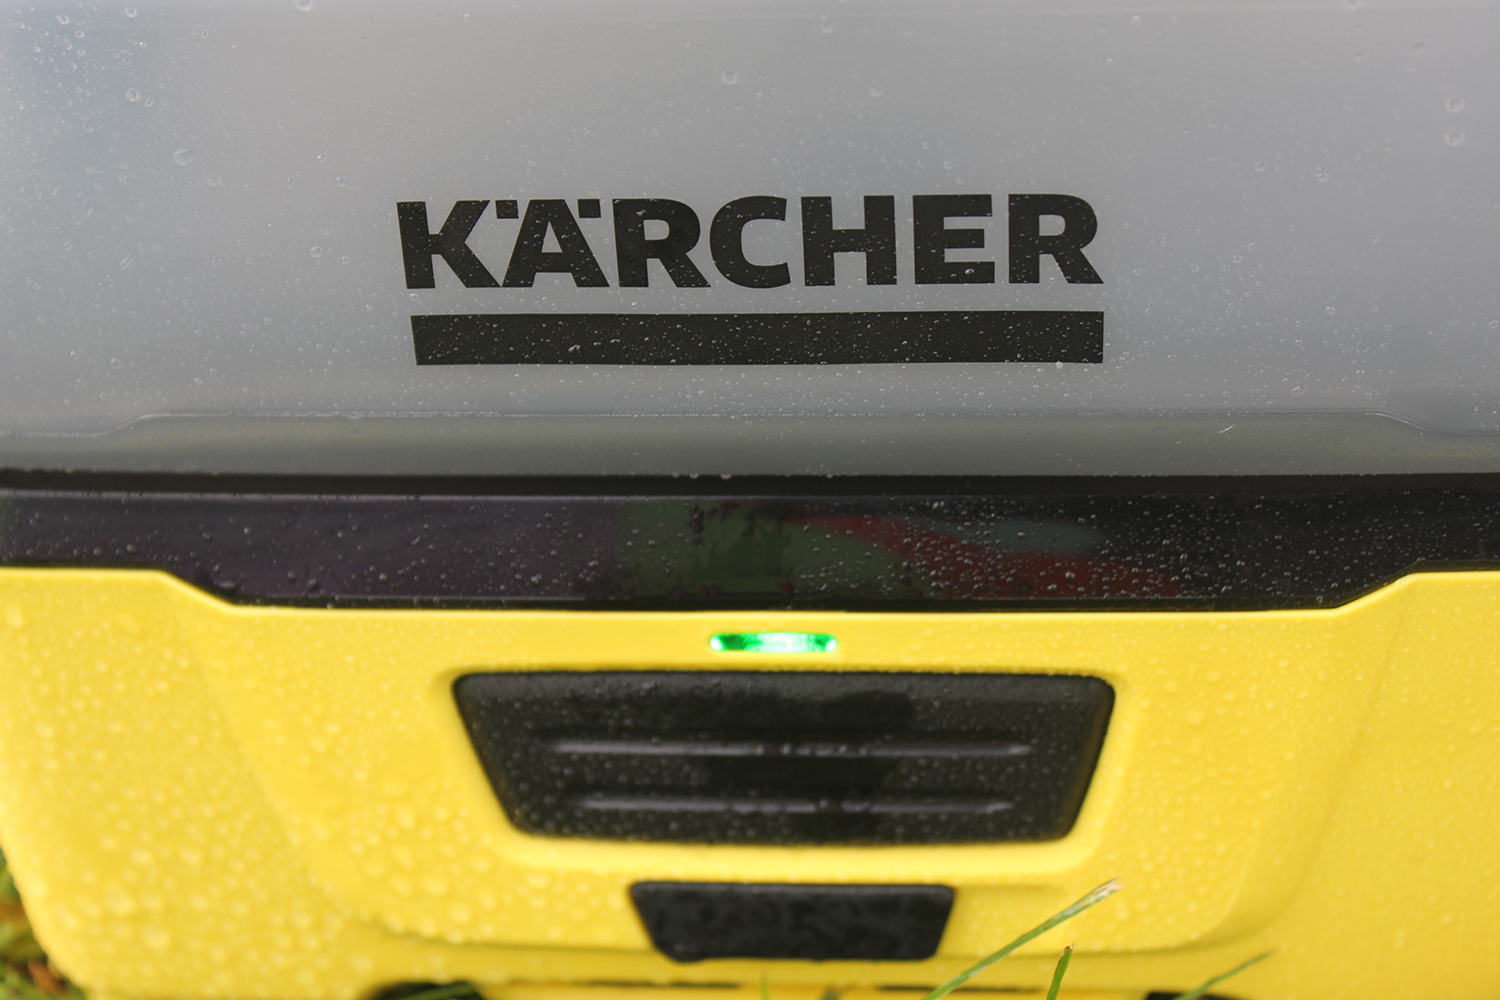 Karcker OC3 portable washer